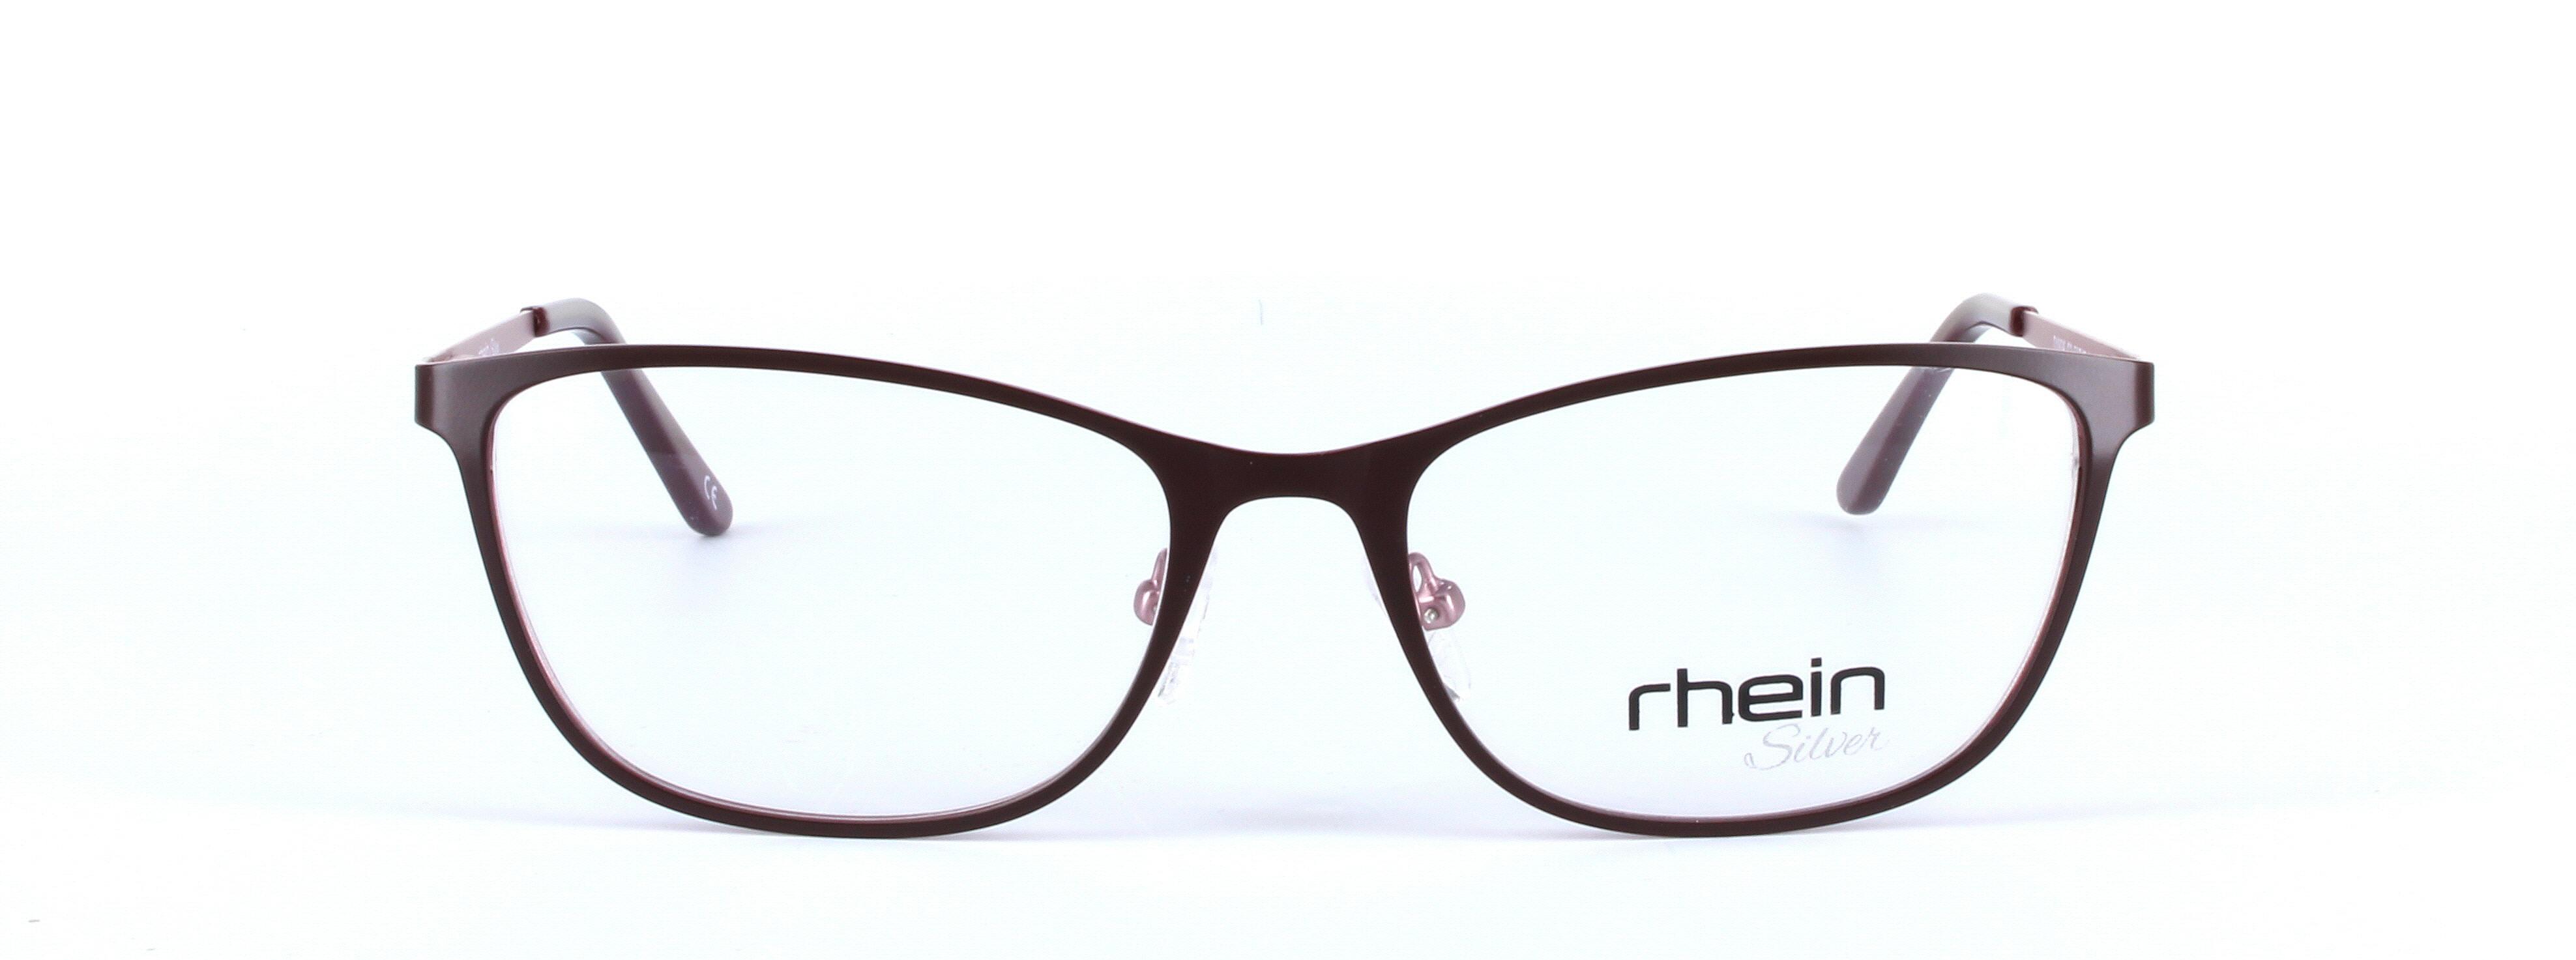 Mabel Burgundy Full Rim Oval Plastic Glasses - Image View 5